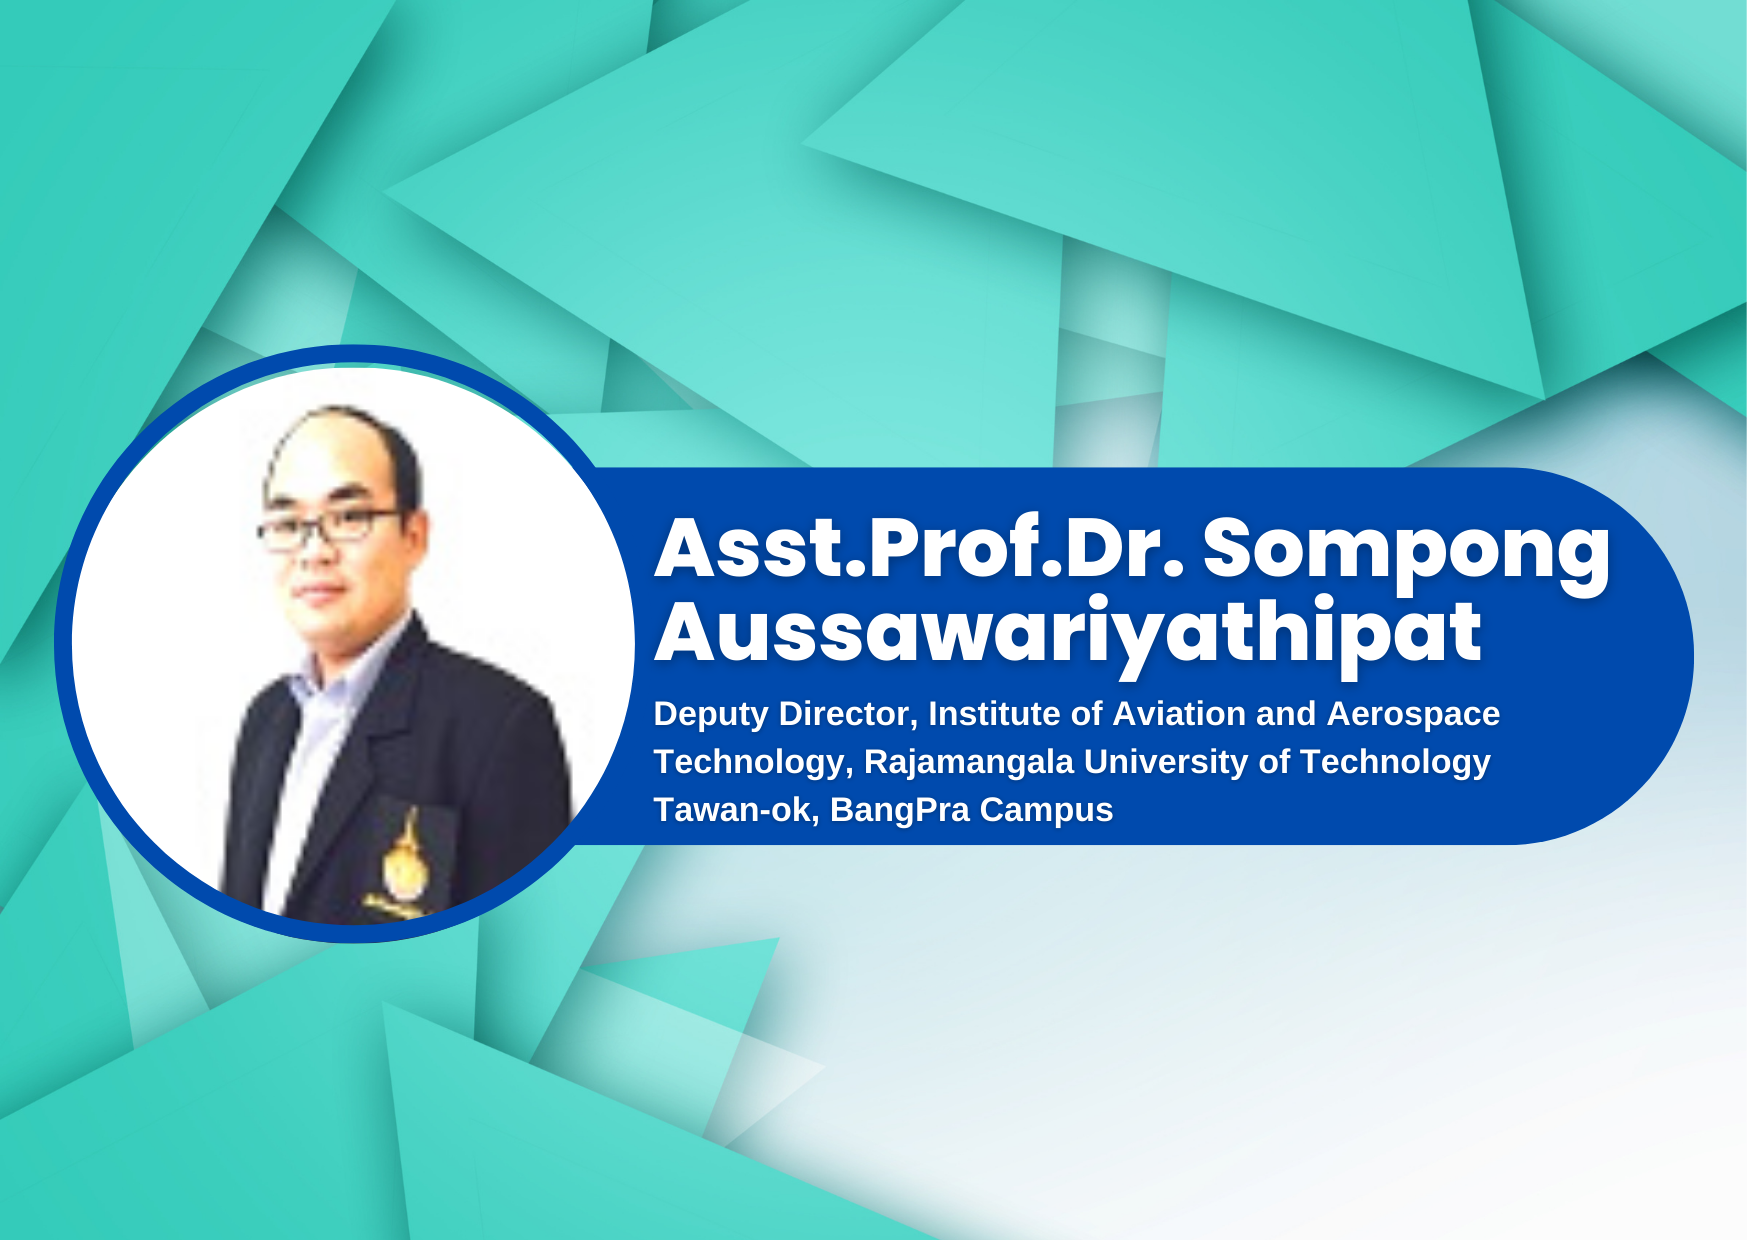 Asst.Prof.Dr.Sompong Aussawariyathipat